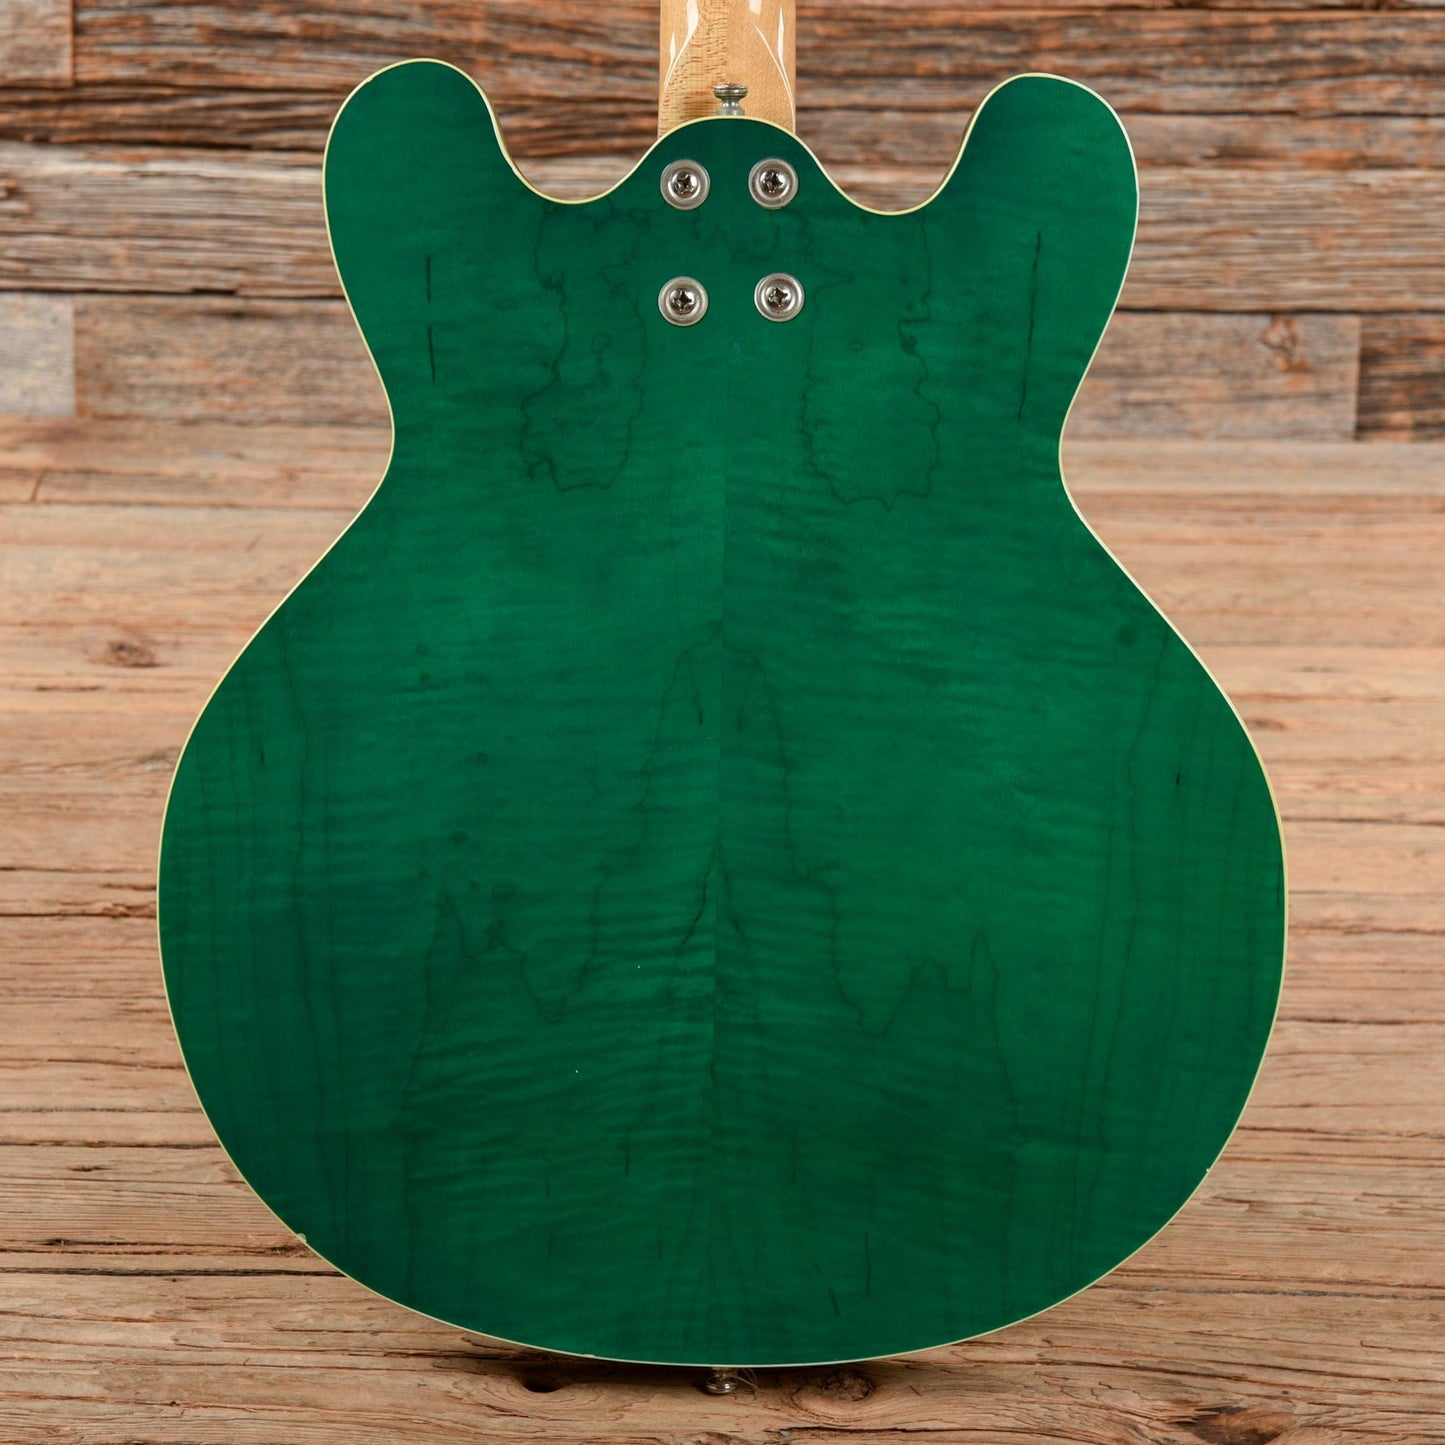 Mosrite Celebrity Translucent Green 1968 Electric Guitars / Hollow Body